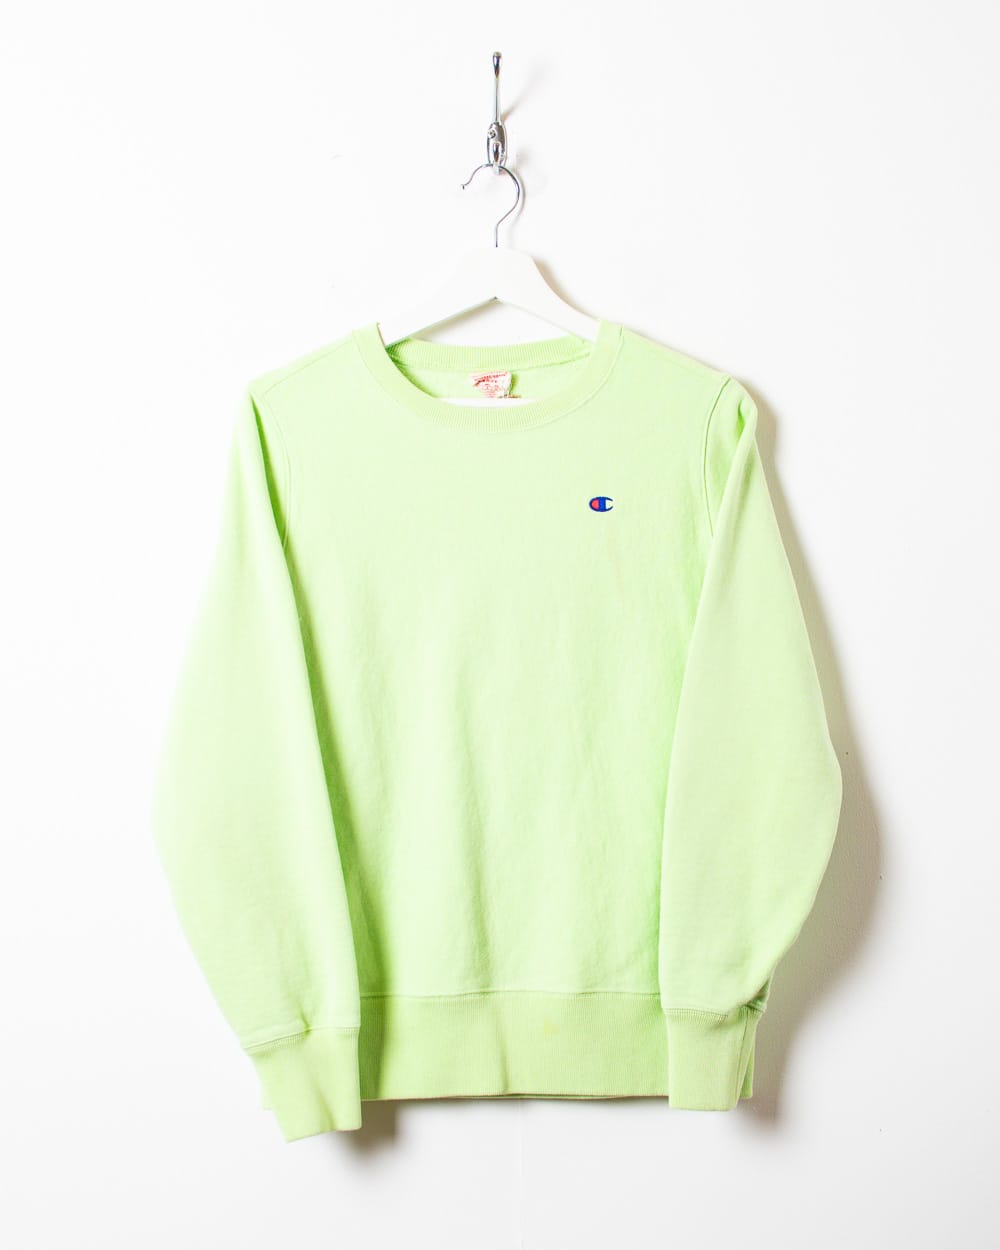 Green Champion Sweatshirt - Small